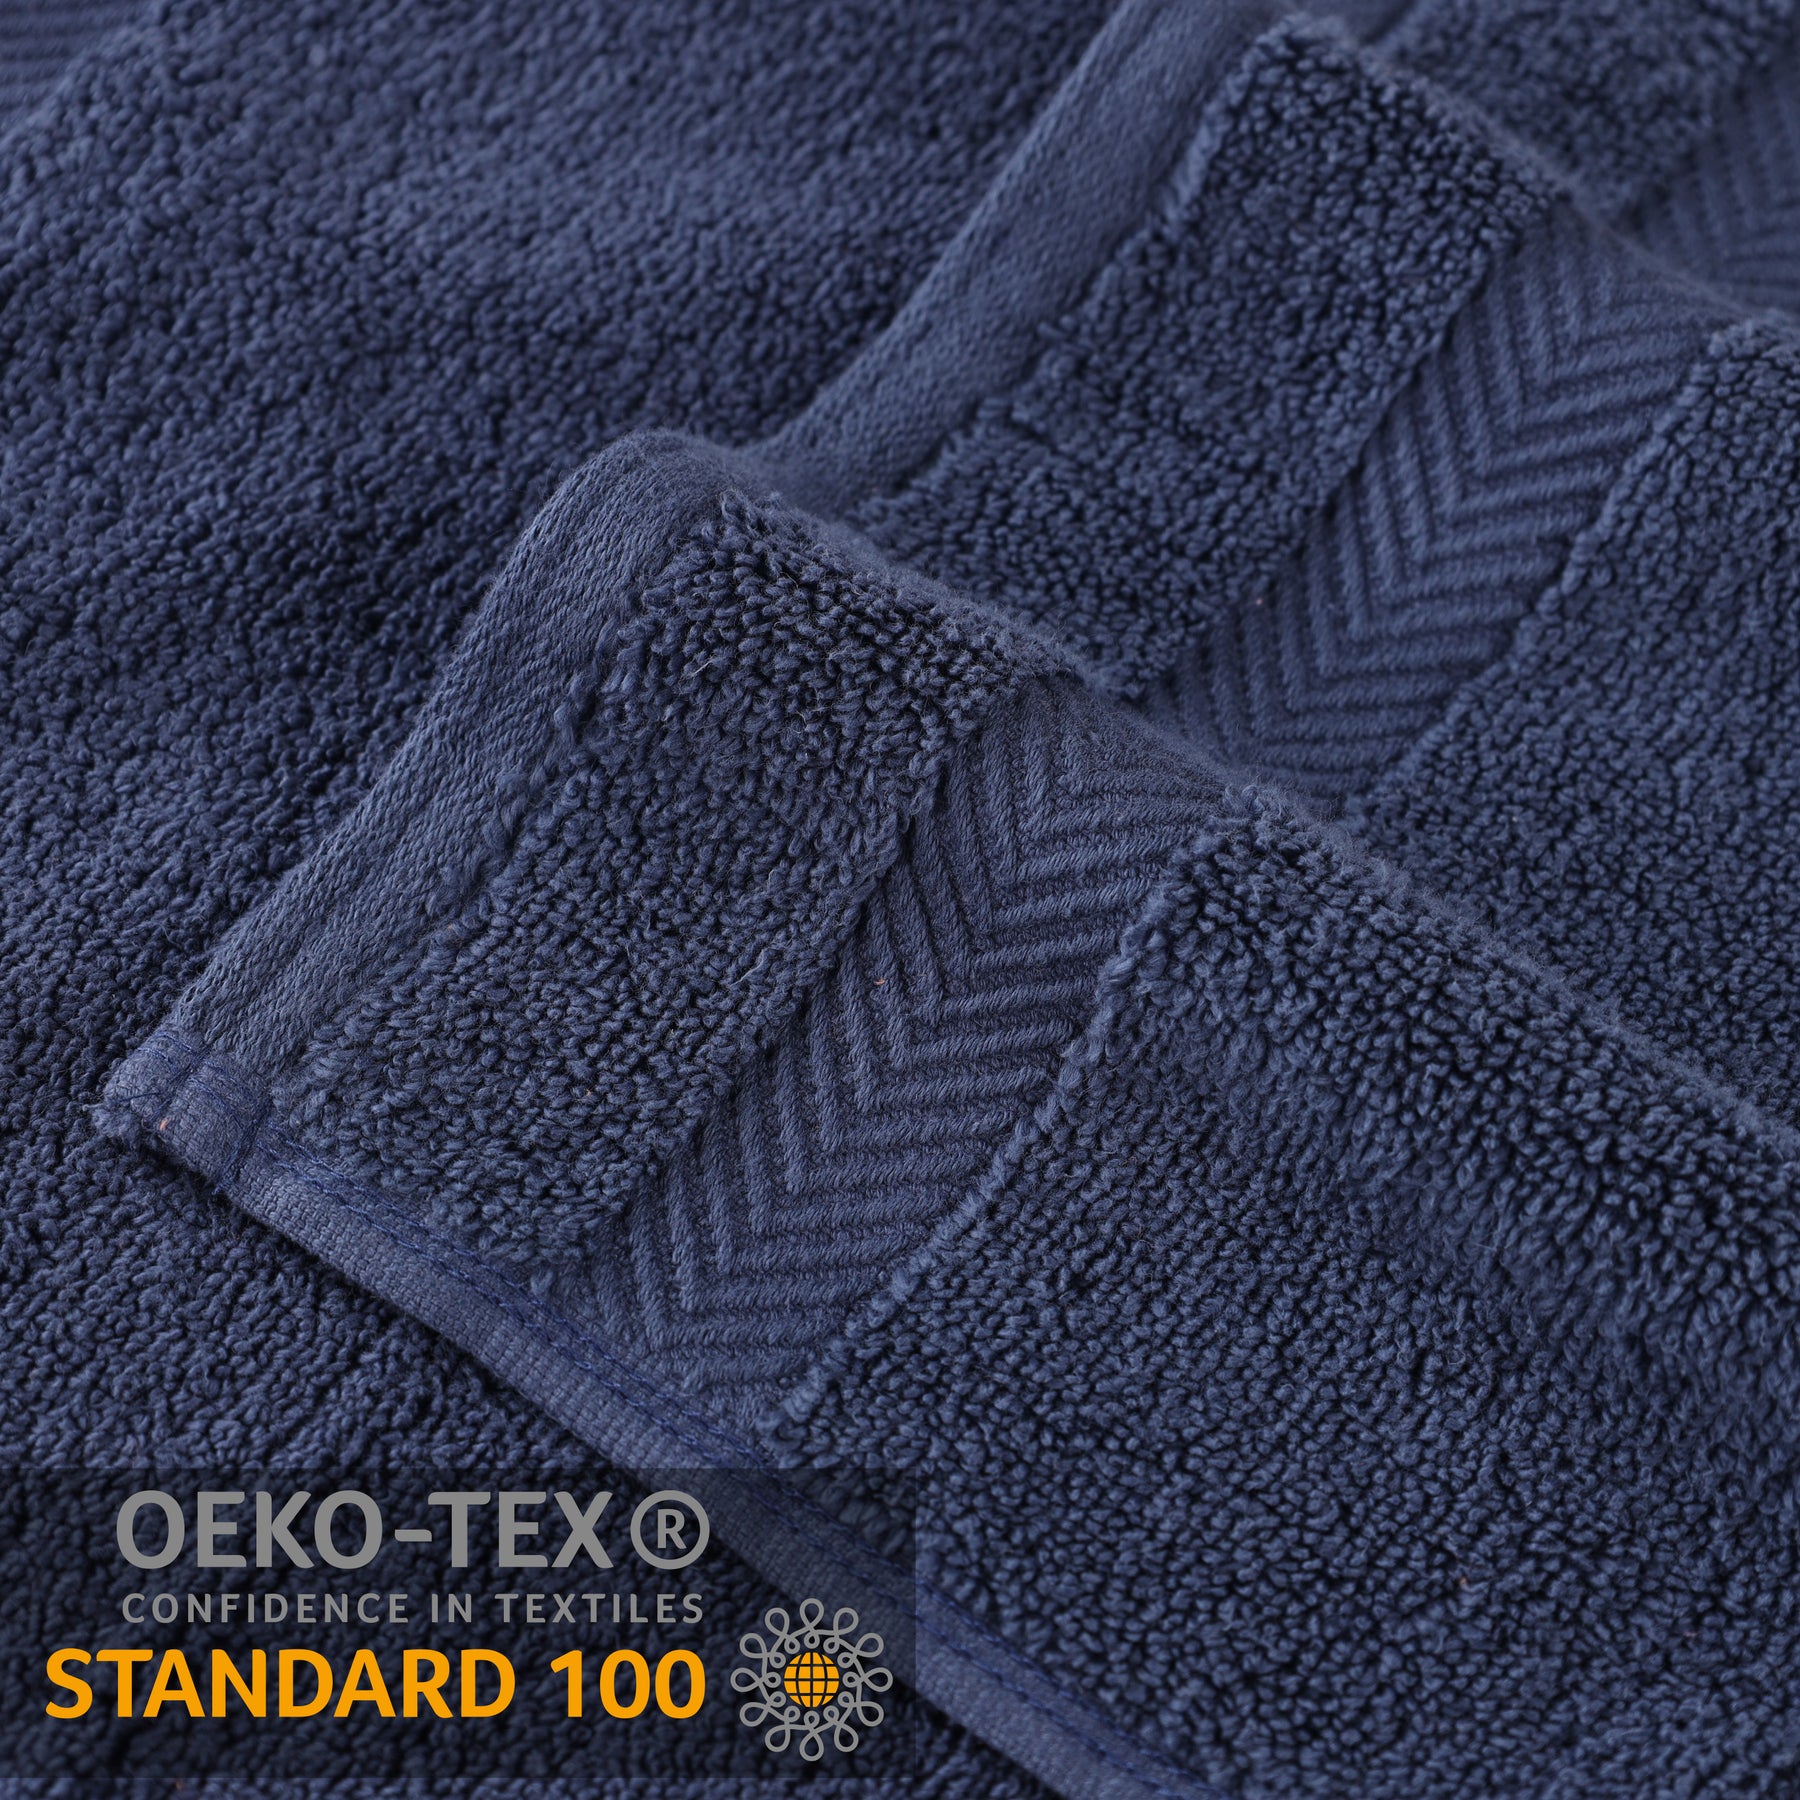 Zero Twist Cotton Solid Ultra-Soft Absorbent Hand Towel - Midnight Blue